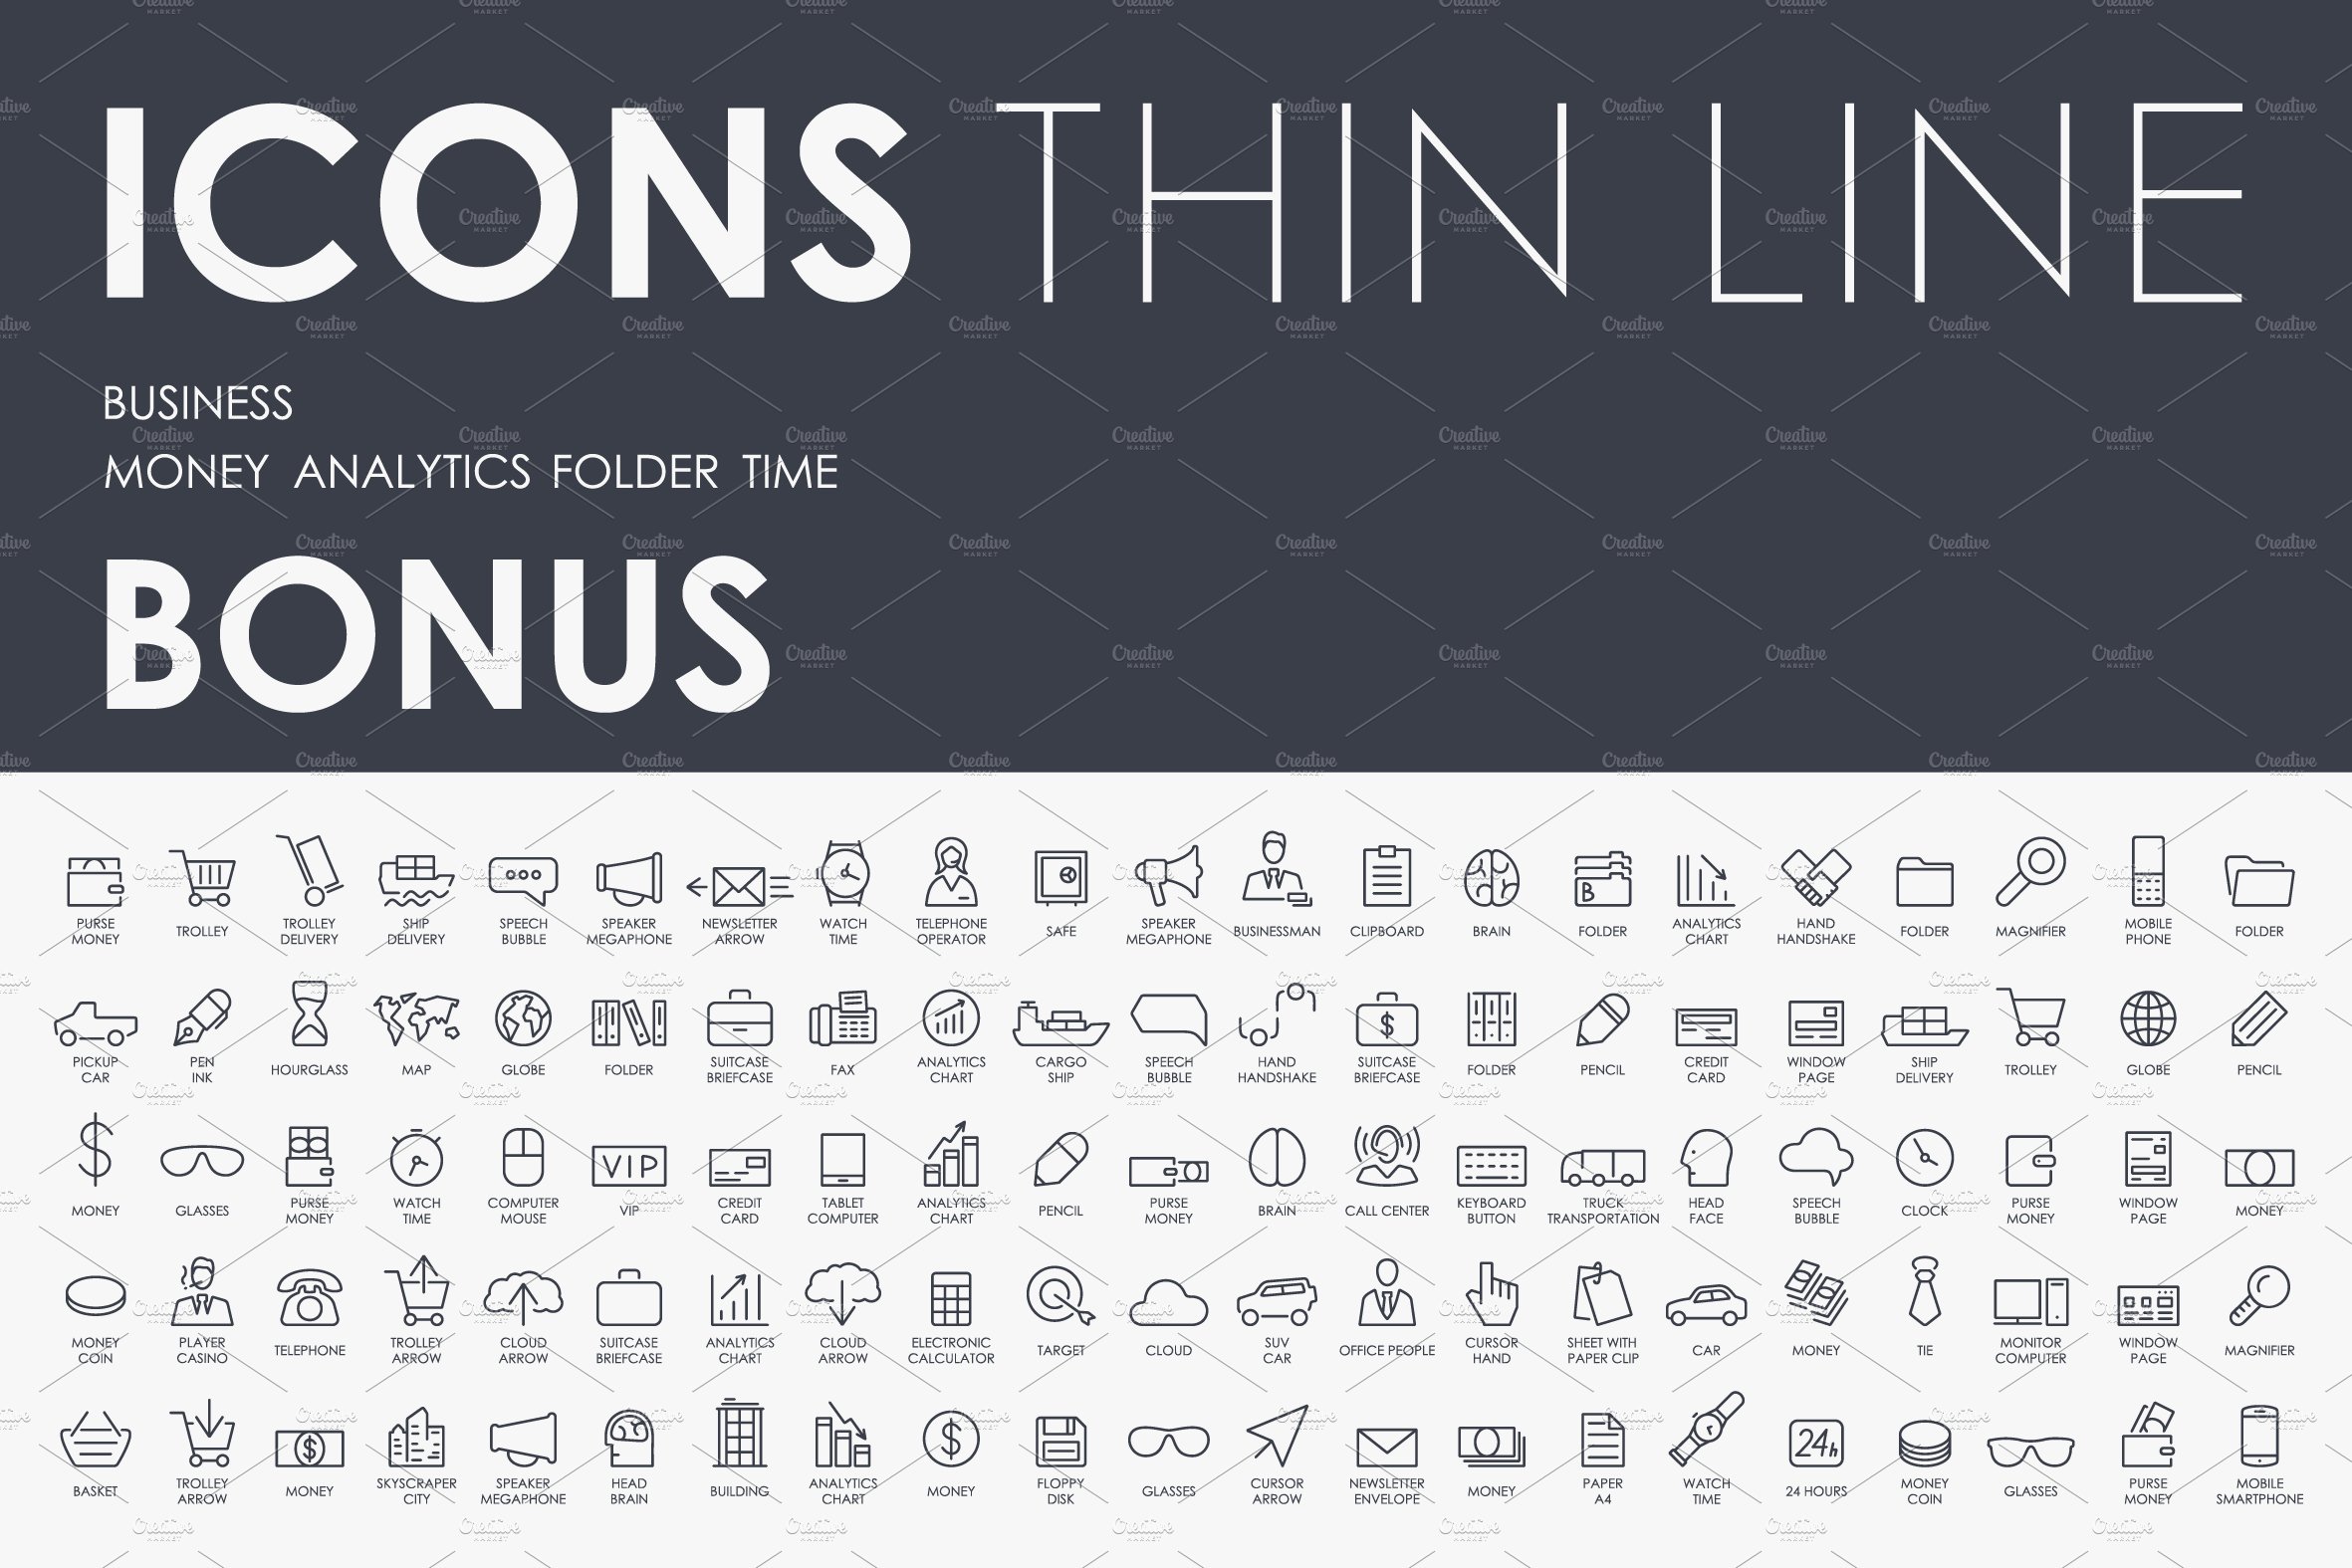 Technology thinline icons + BONUS preview image.